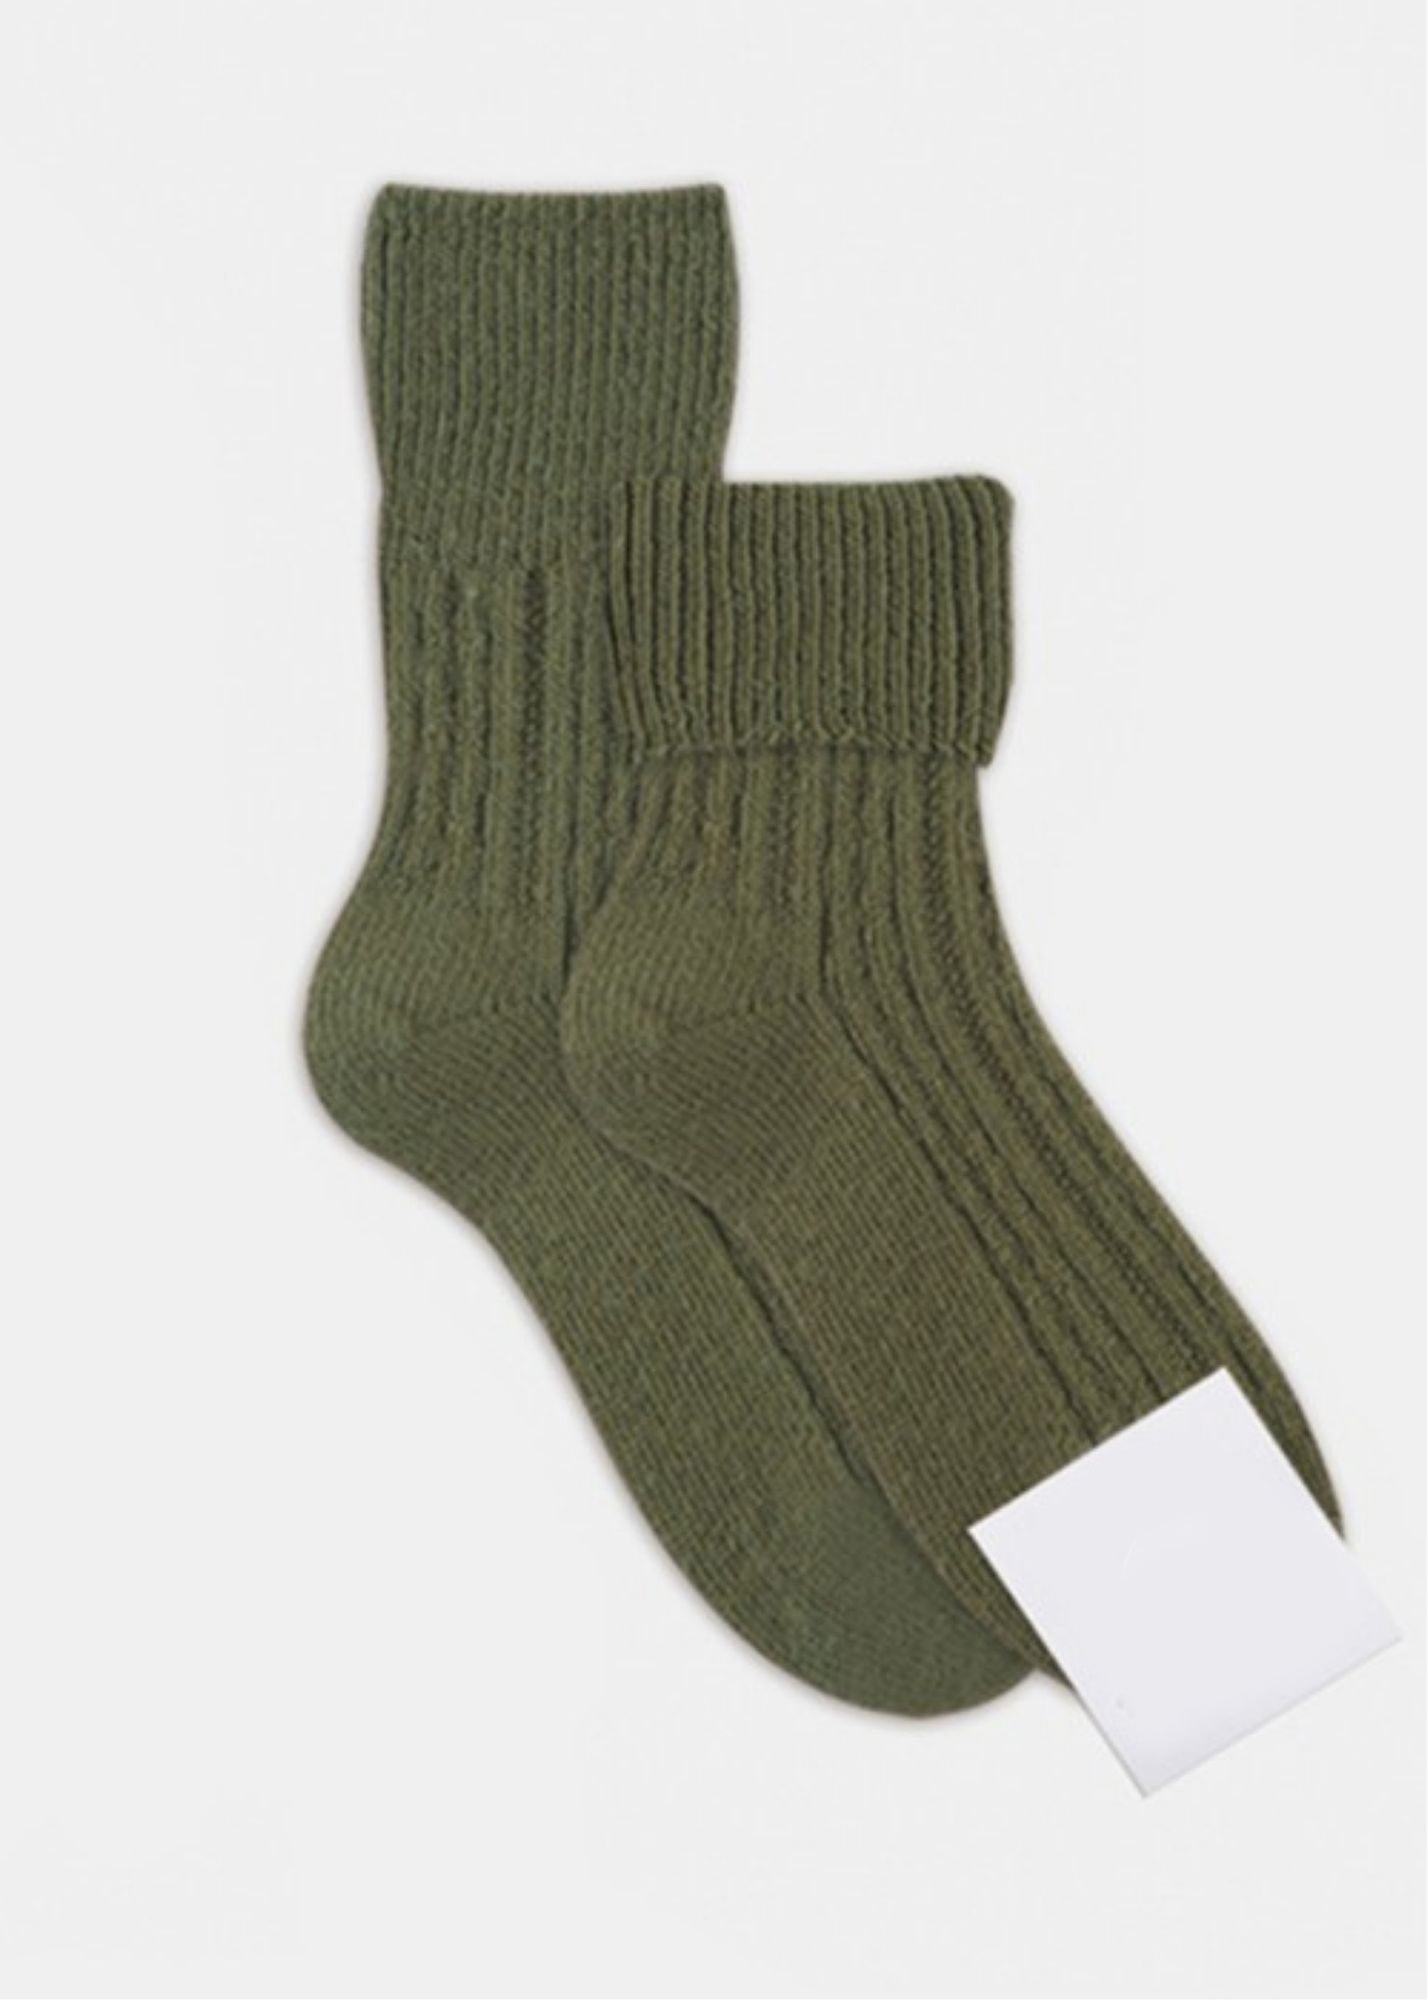 Wool Blend Crew Length Printed Socks Accessories Green Olive